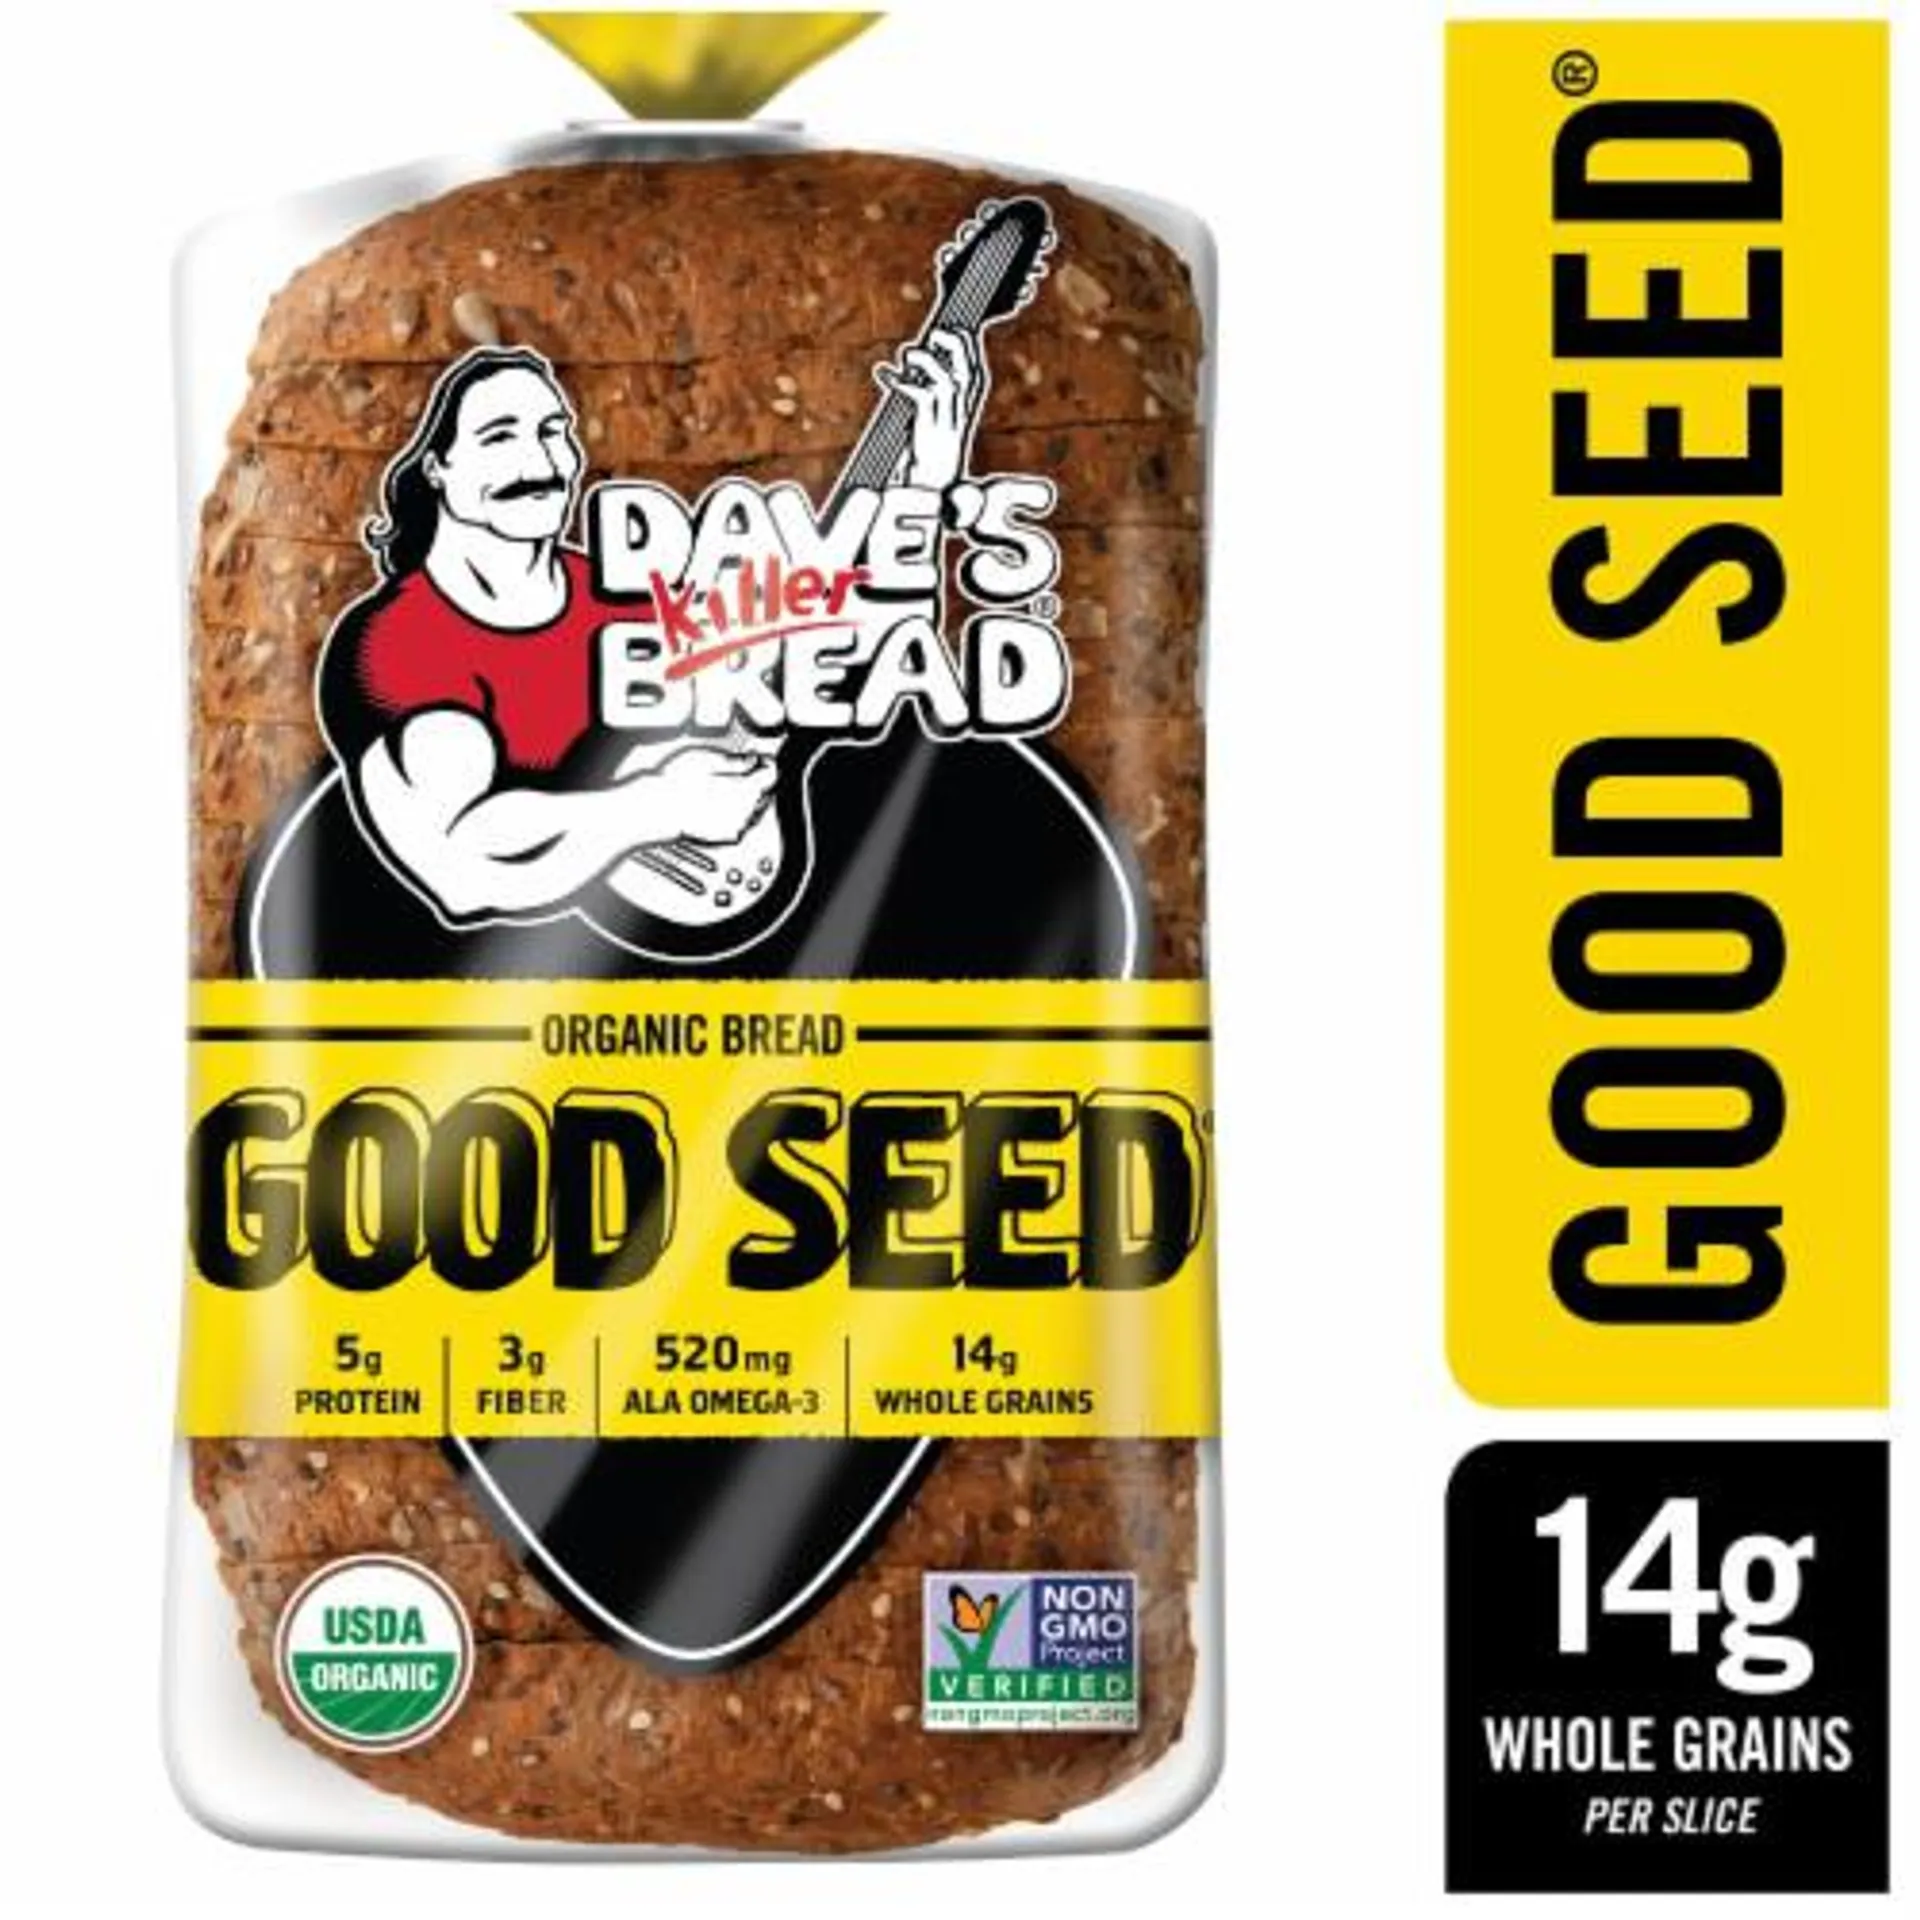 Dave's Killer Bread Good Seed Whole Grain Organic Bread